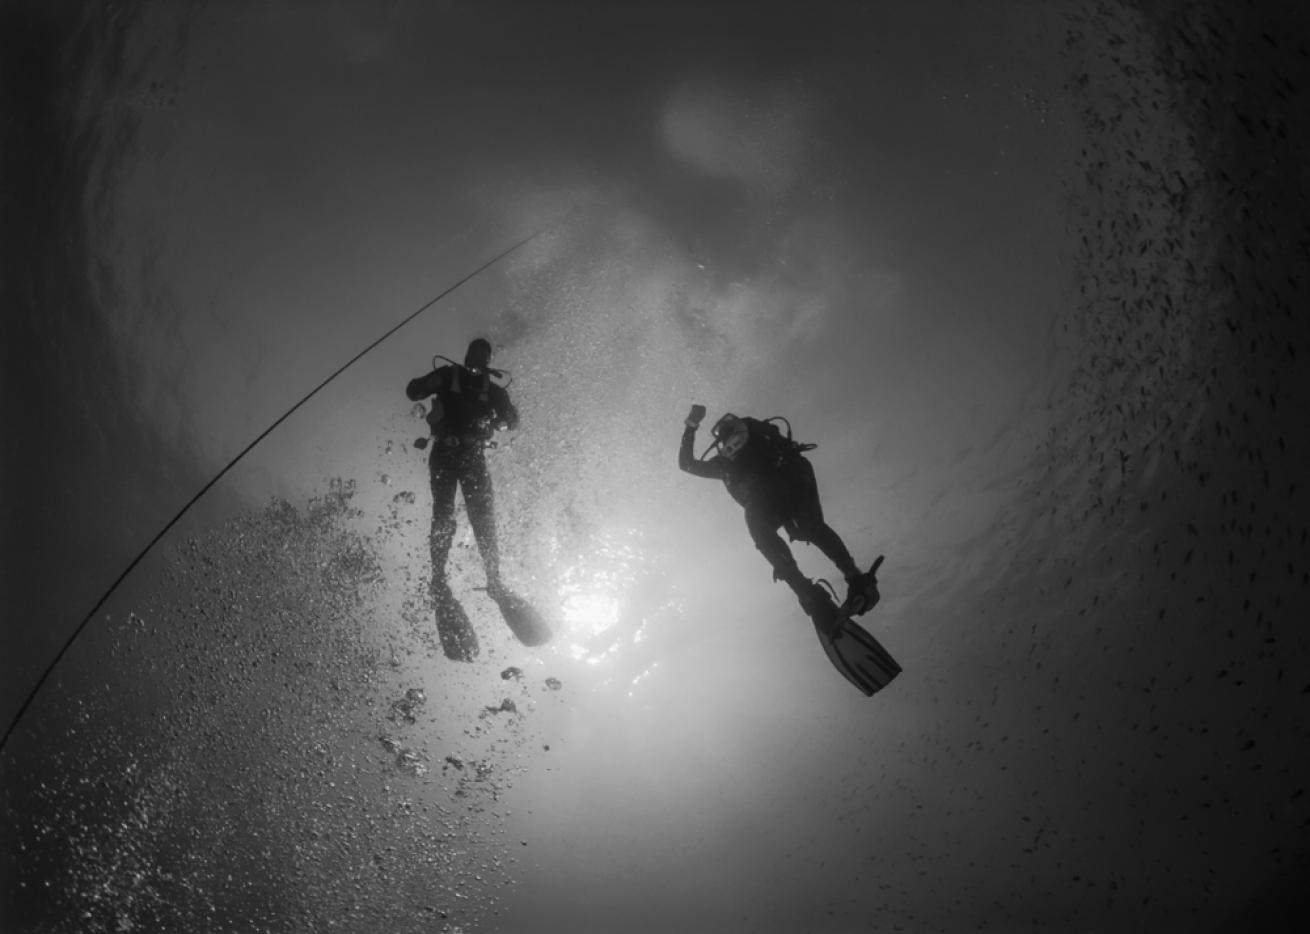 Scuba Divers Underwater Black and White Photo